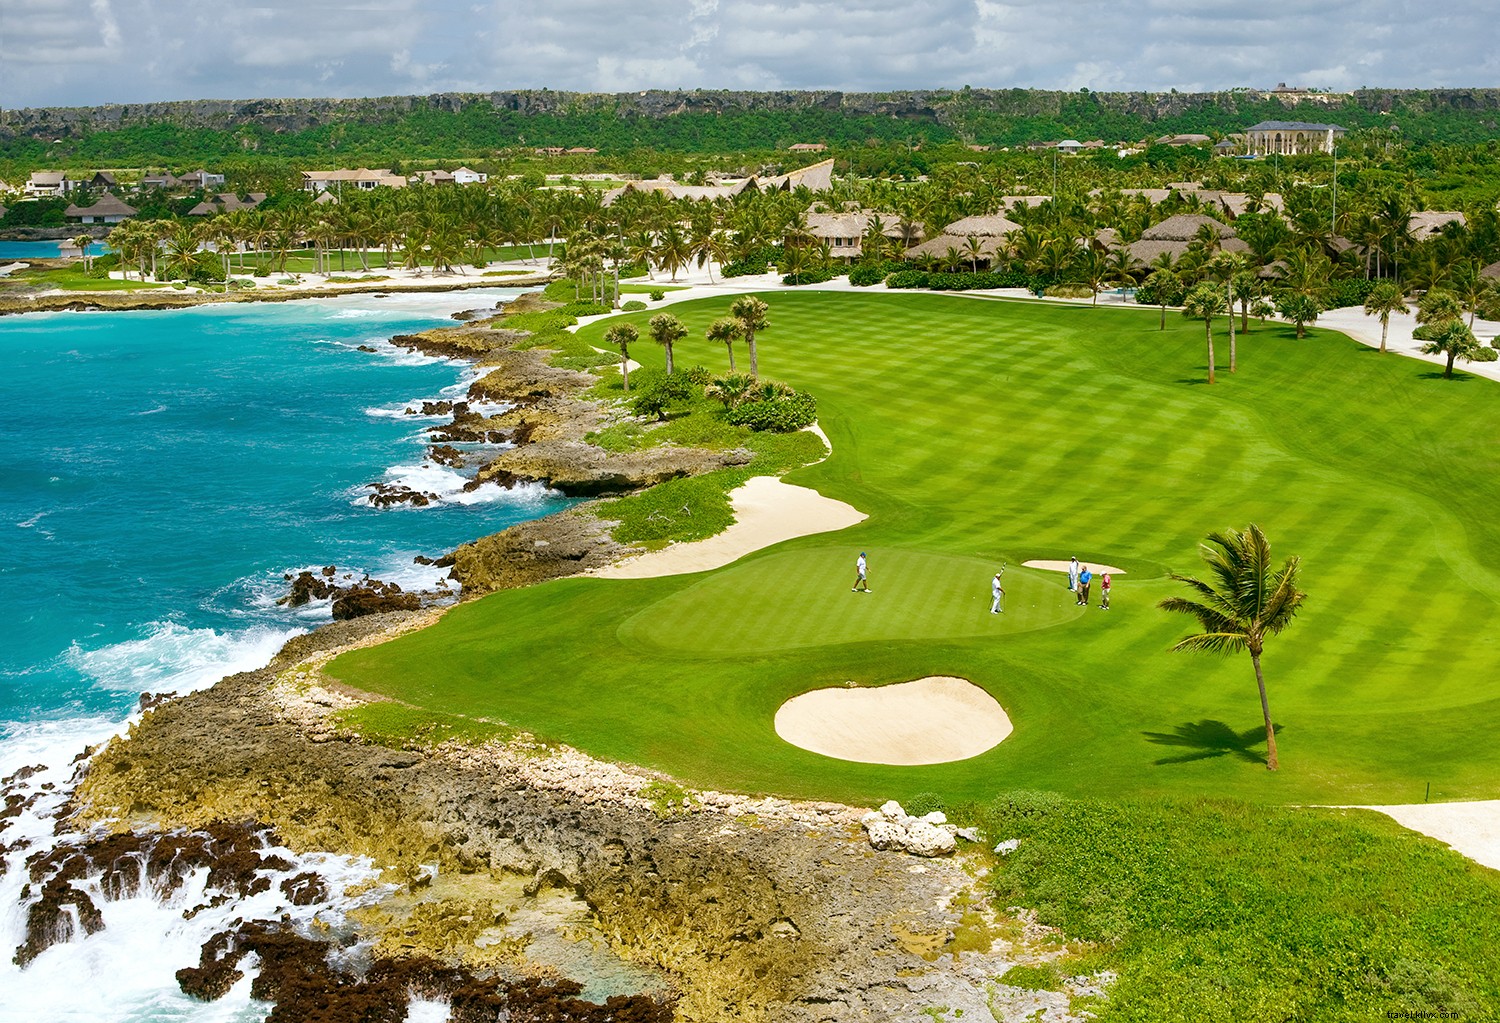 Românticos, Jogadores de golfe, Iogues:Theres a Punta Cana For That 